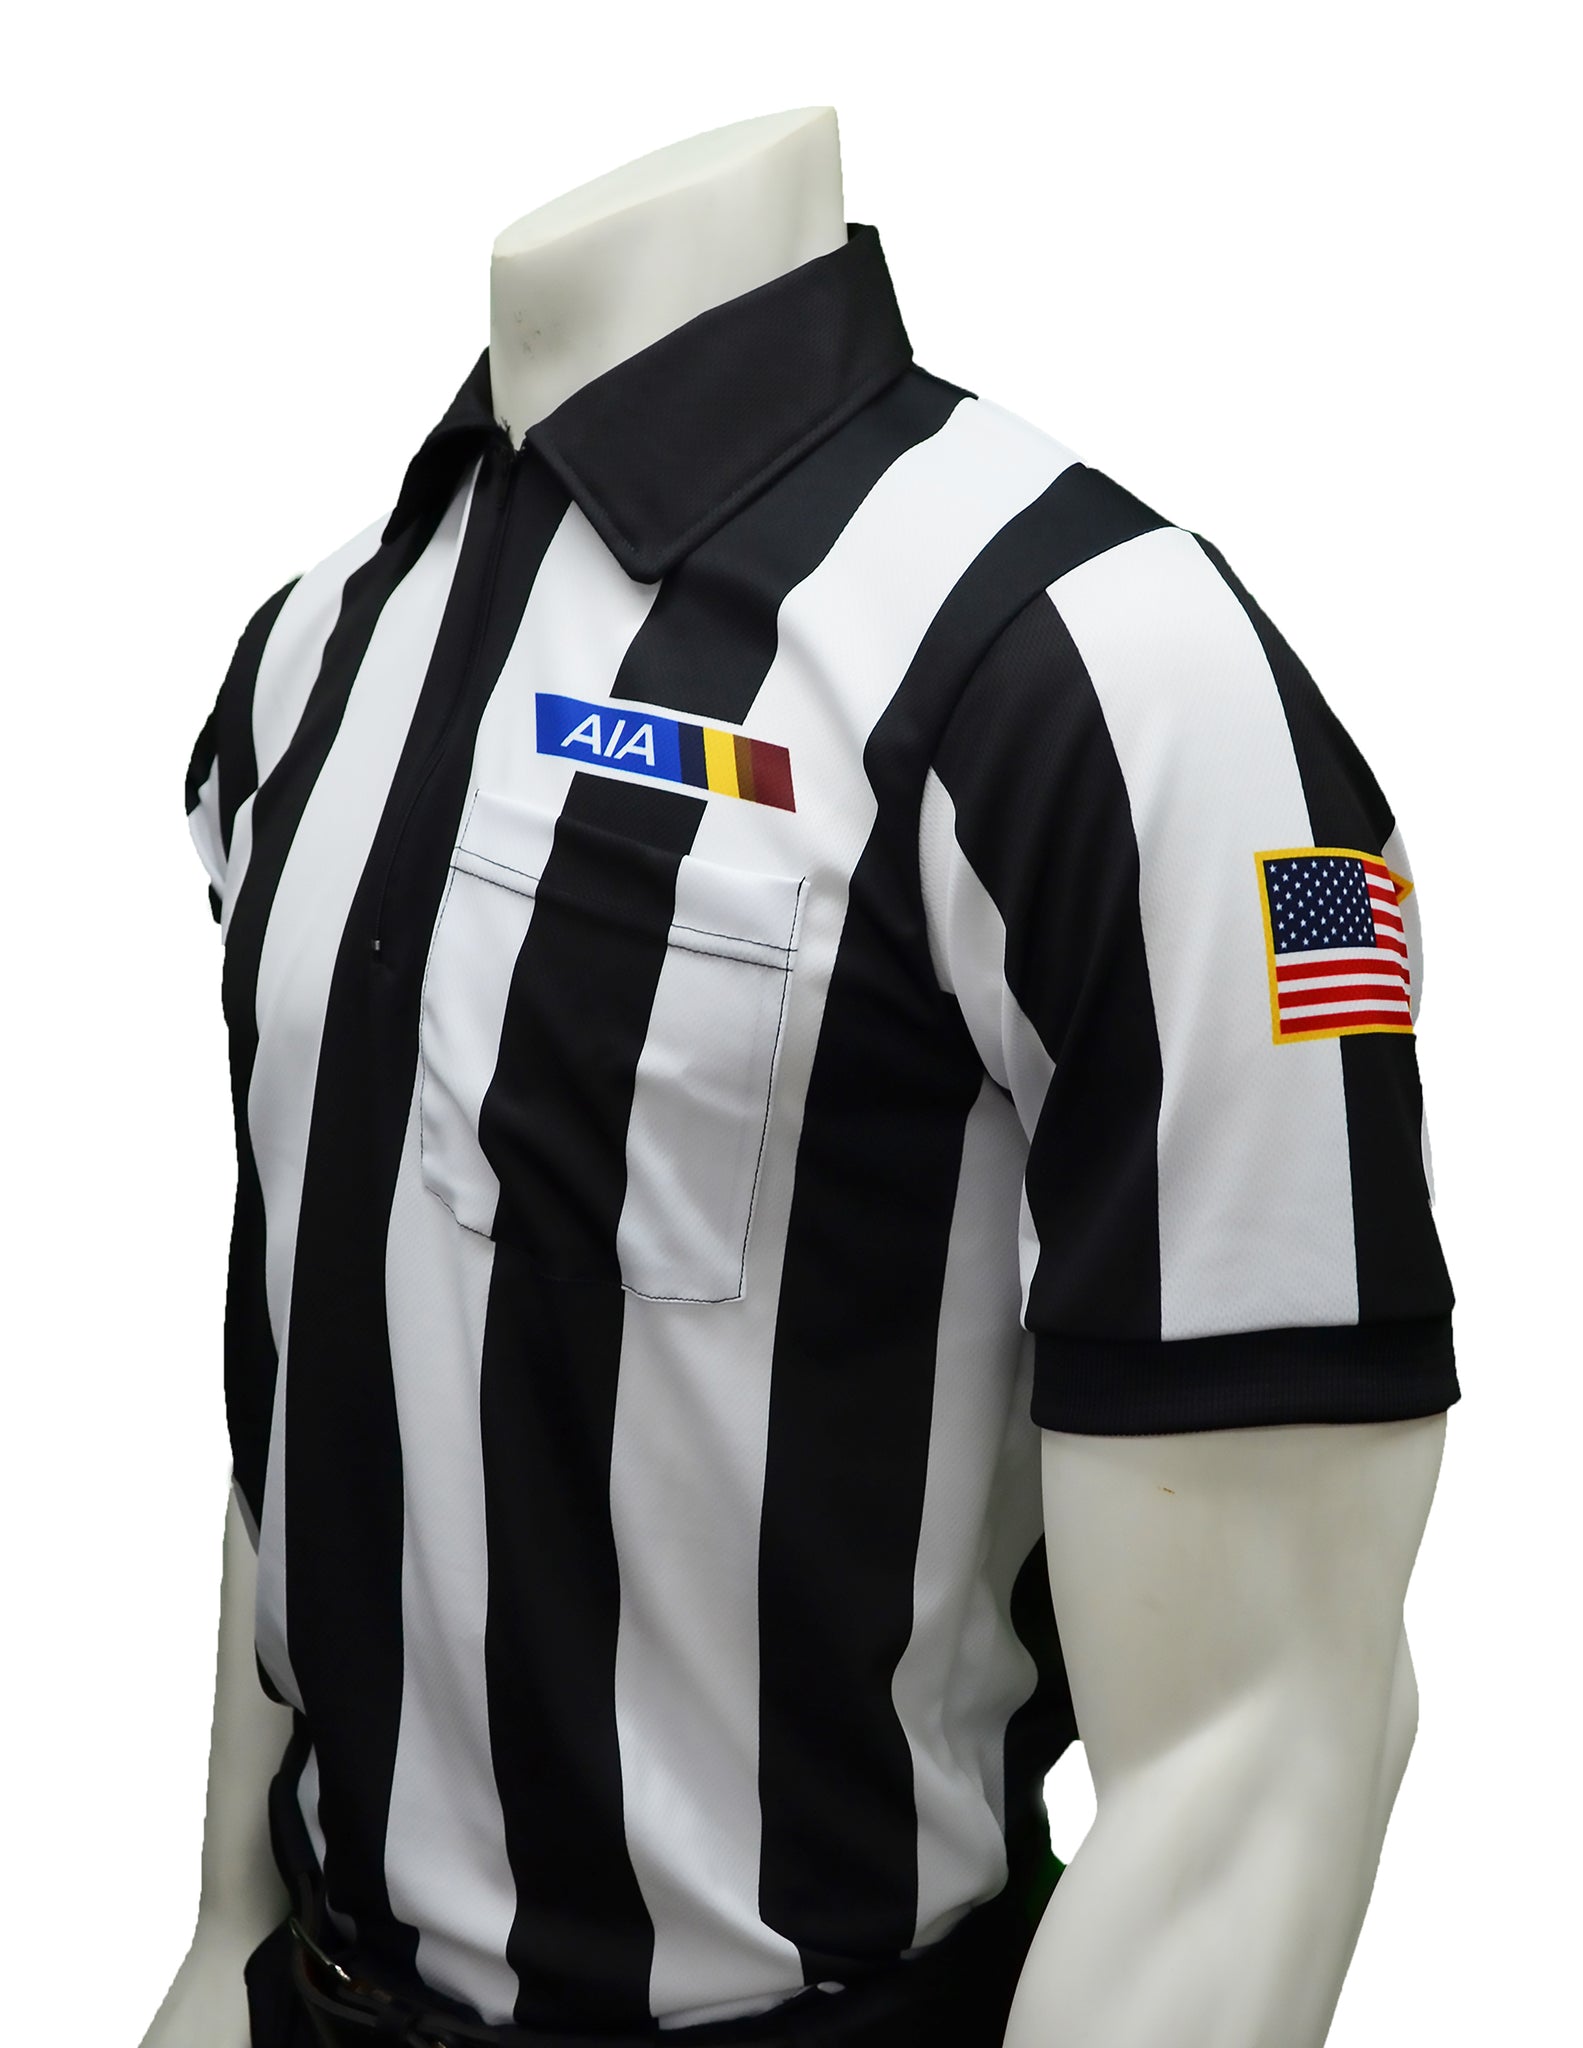 USA140AZ-607 - Smitty "Made in USA" - Football "BODY FLEX" Men's Short Sleeve Shirt - Position Letter & Flag